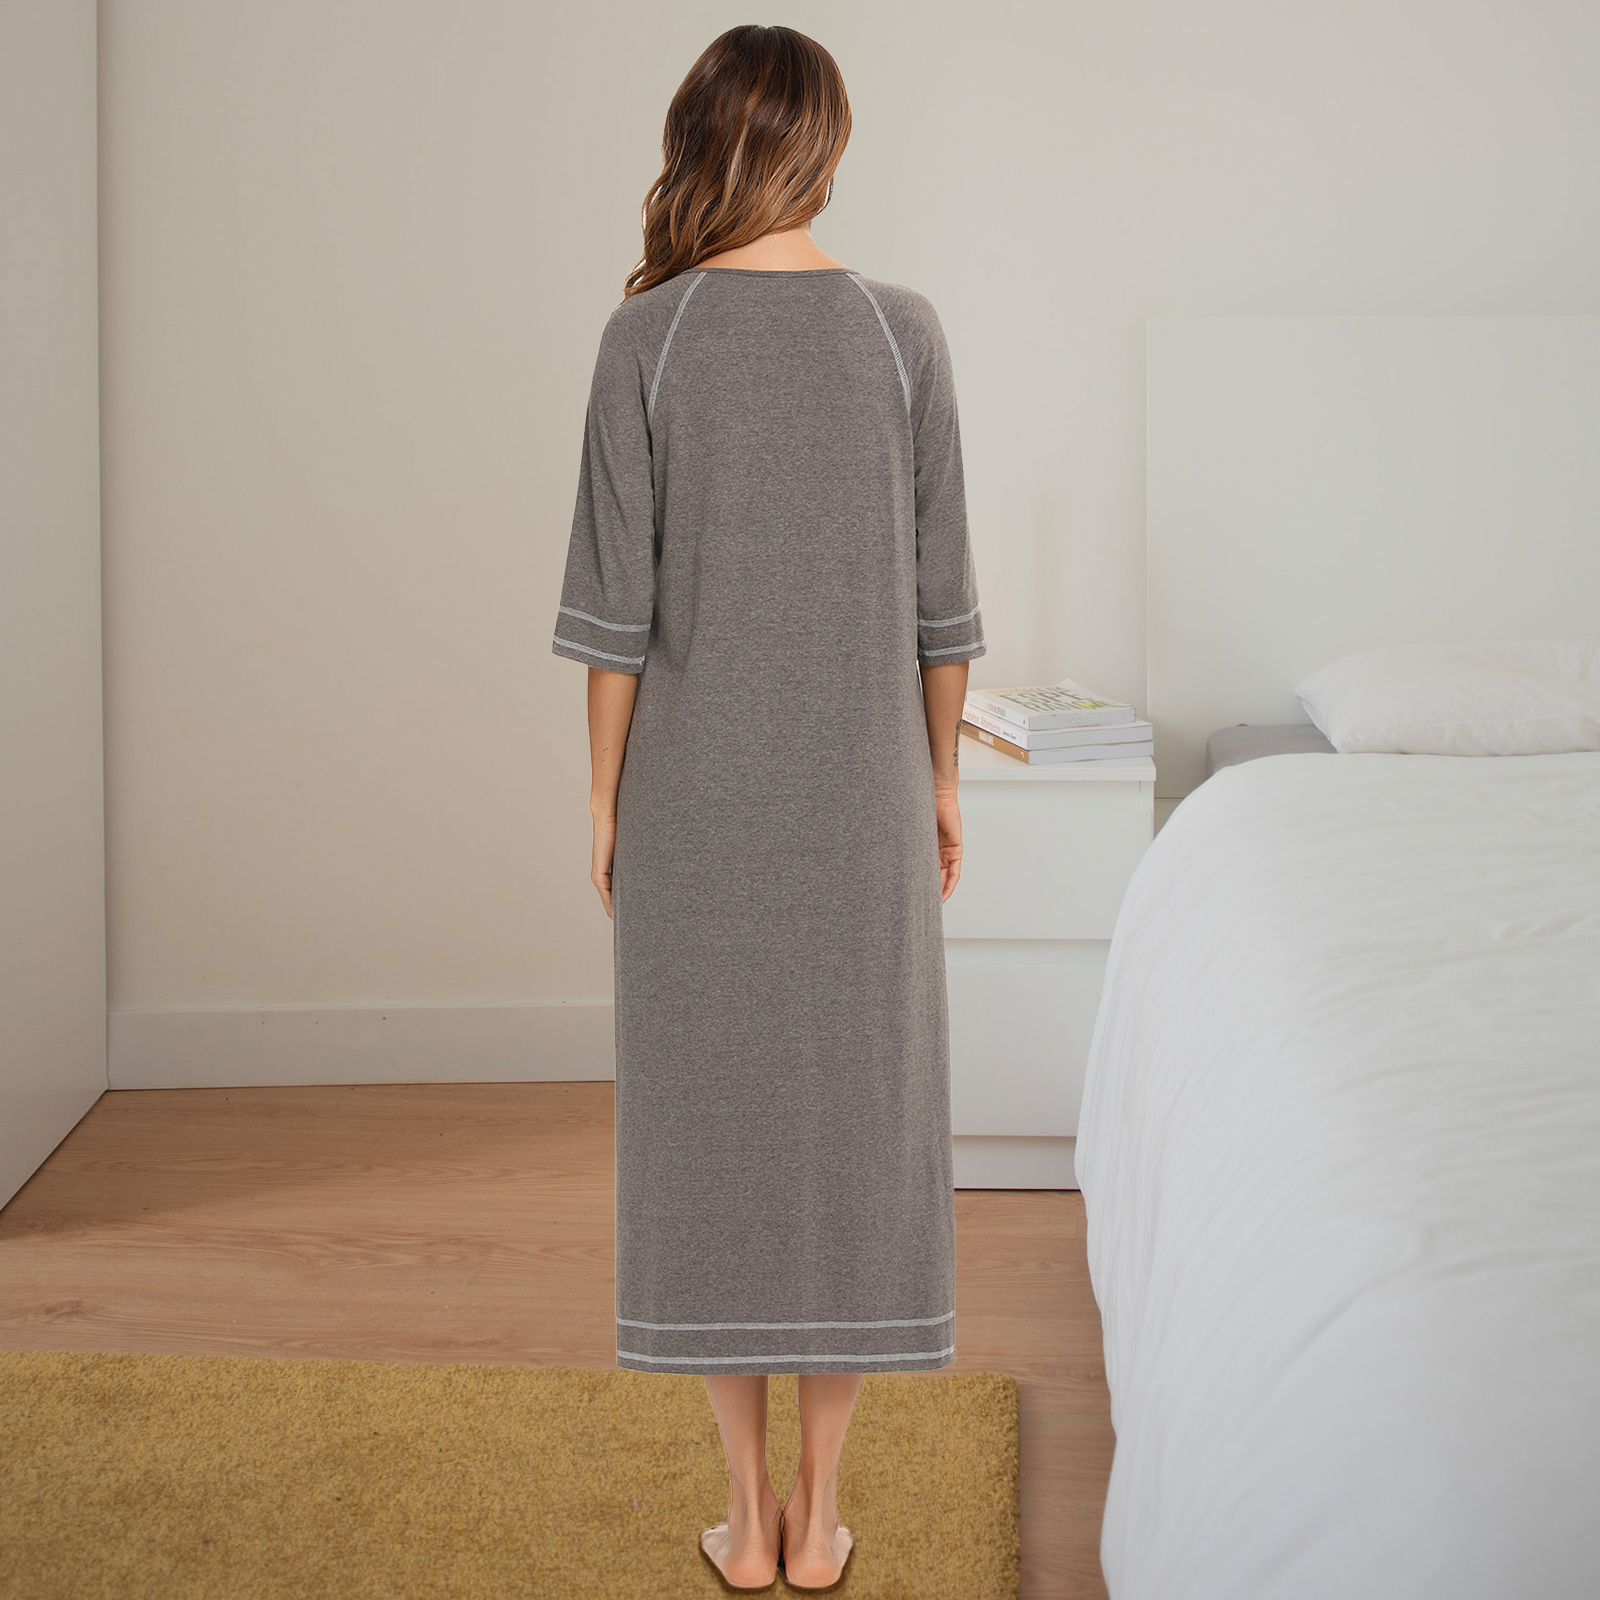 LOFIR Women Zipper Front Robes 3/4 Sleeve Loungewear Pockets Nightgown Loose-Fitting Ladies Long Sleepwear(Grey,L) - image 4 of 7